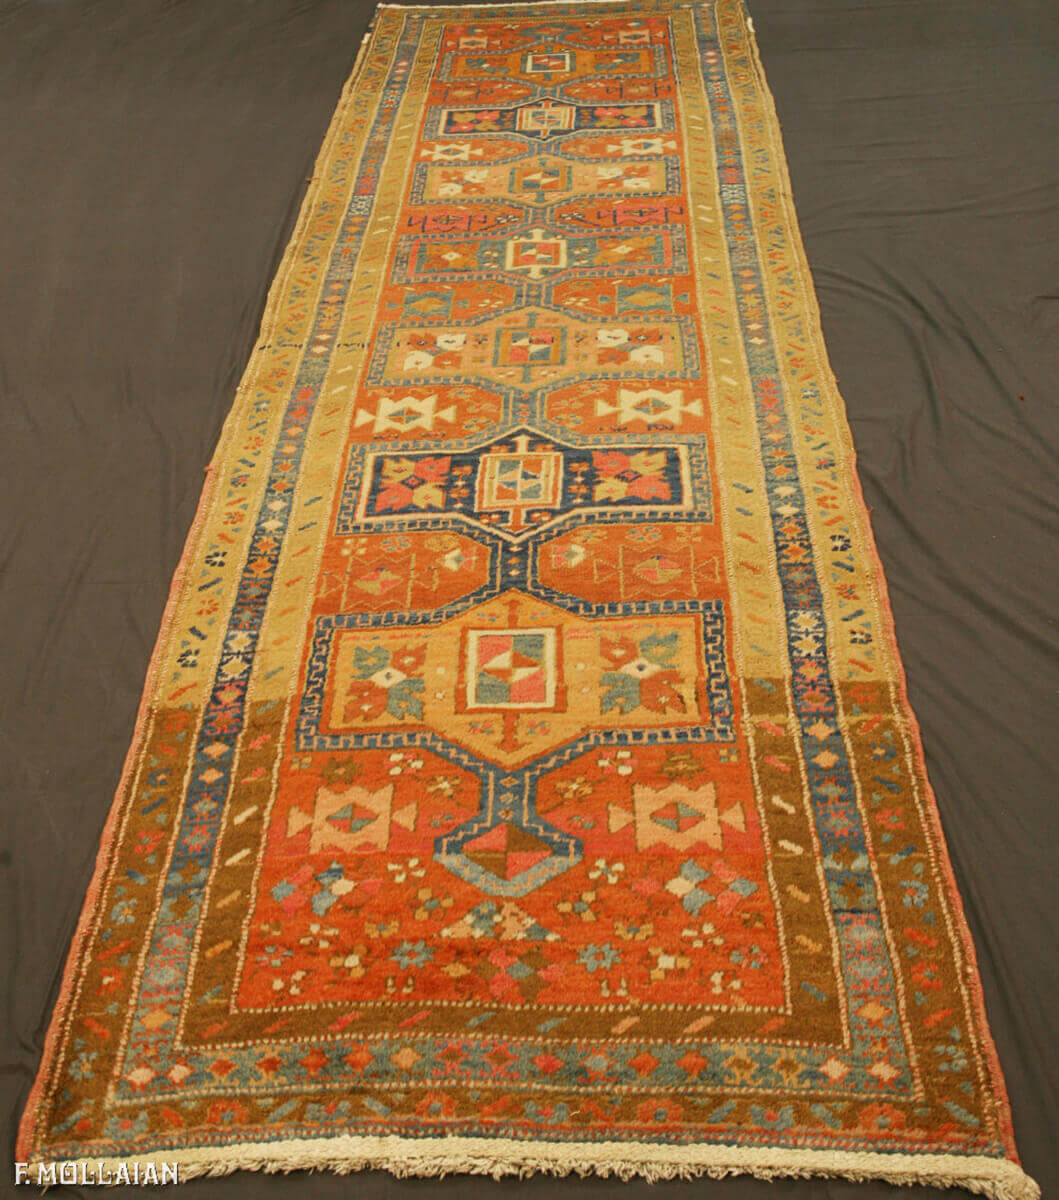 Antique Runner Persian Heriz Rug n°:78132658